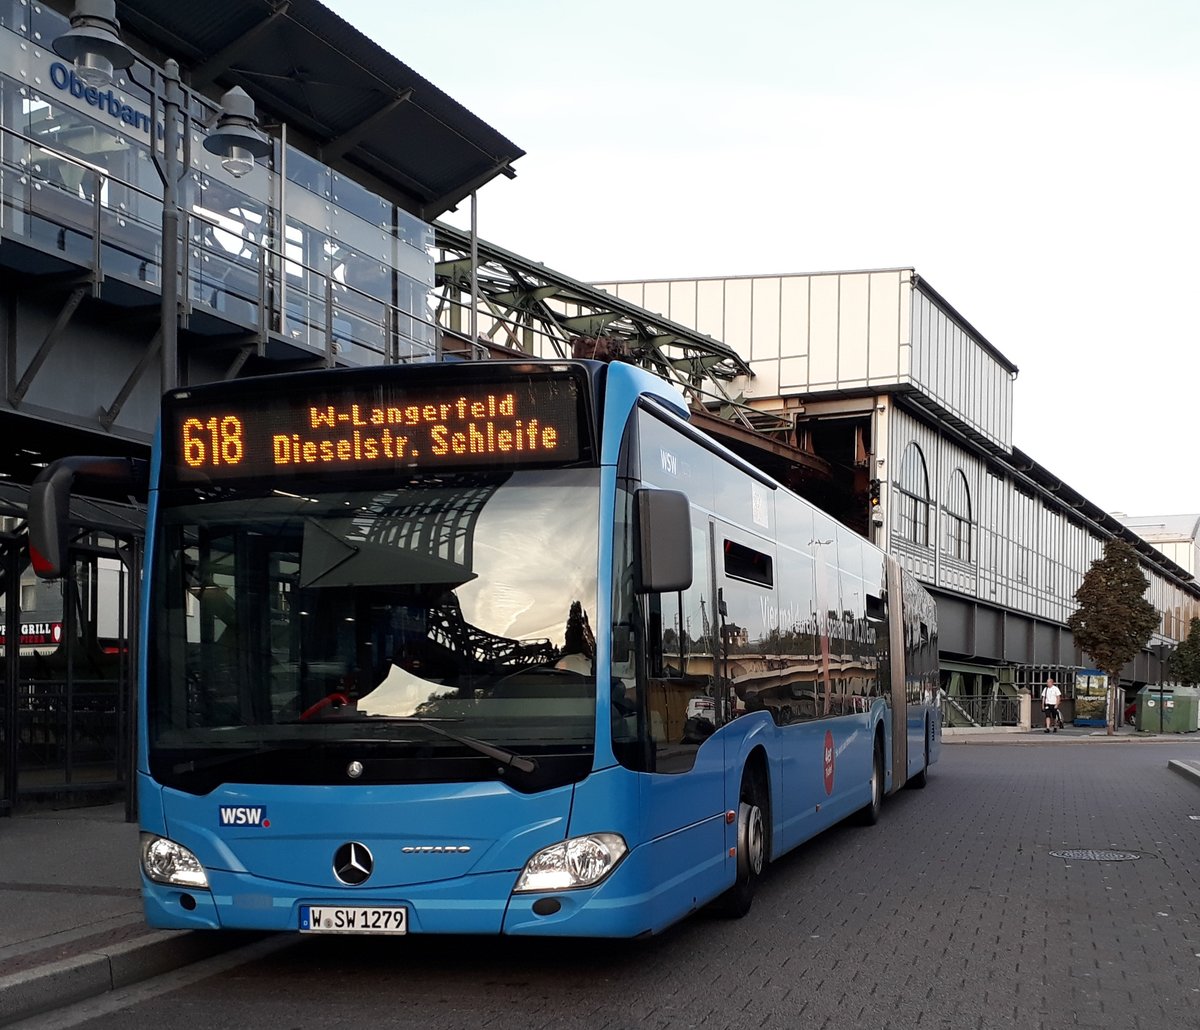 WSW 1279
Aufgenommen am 20 September 2018
Wuppertal, Oberbarmen Bahnhof
W SW 1279